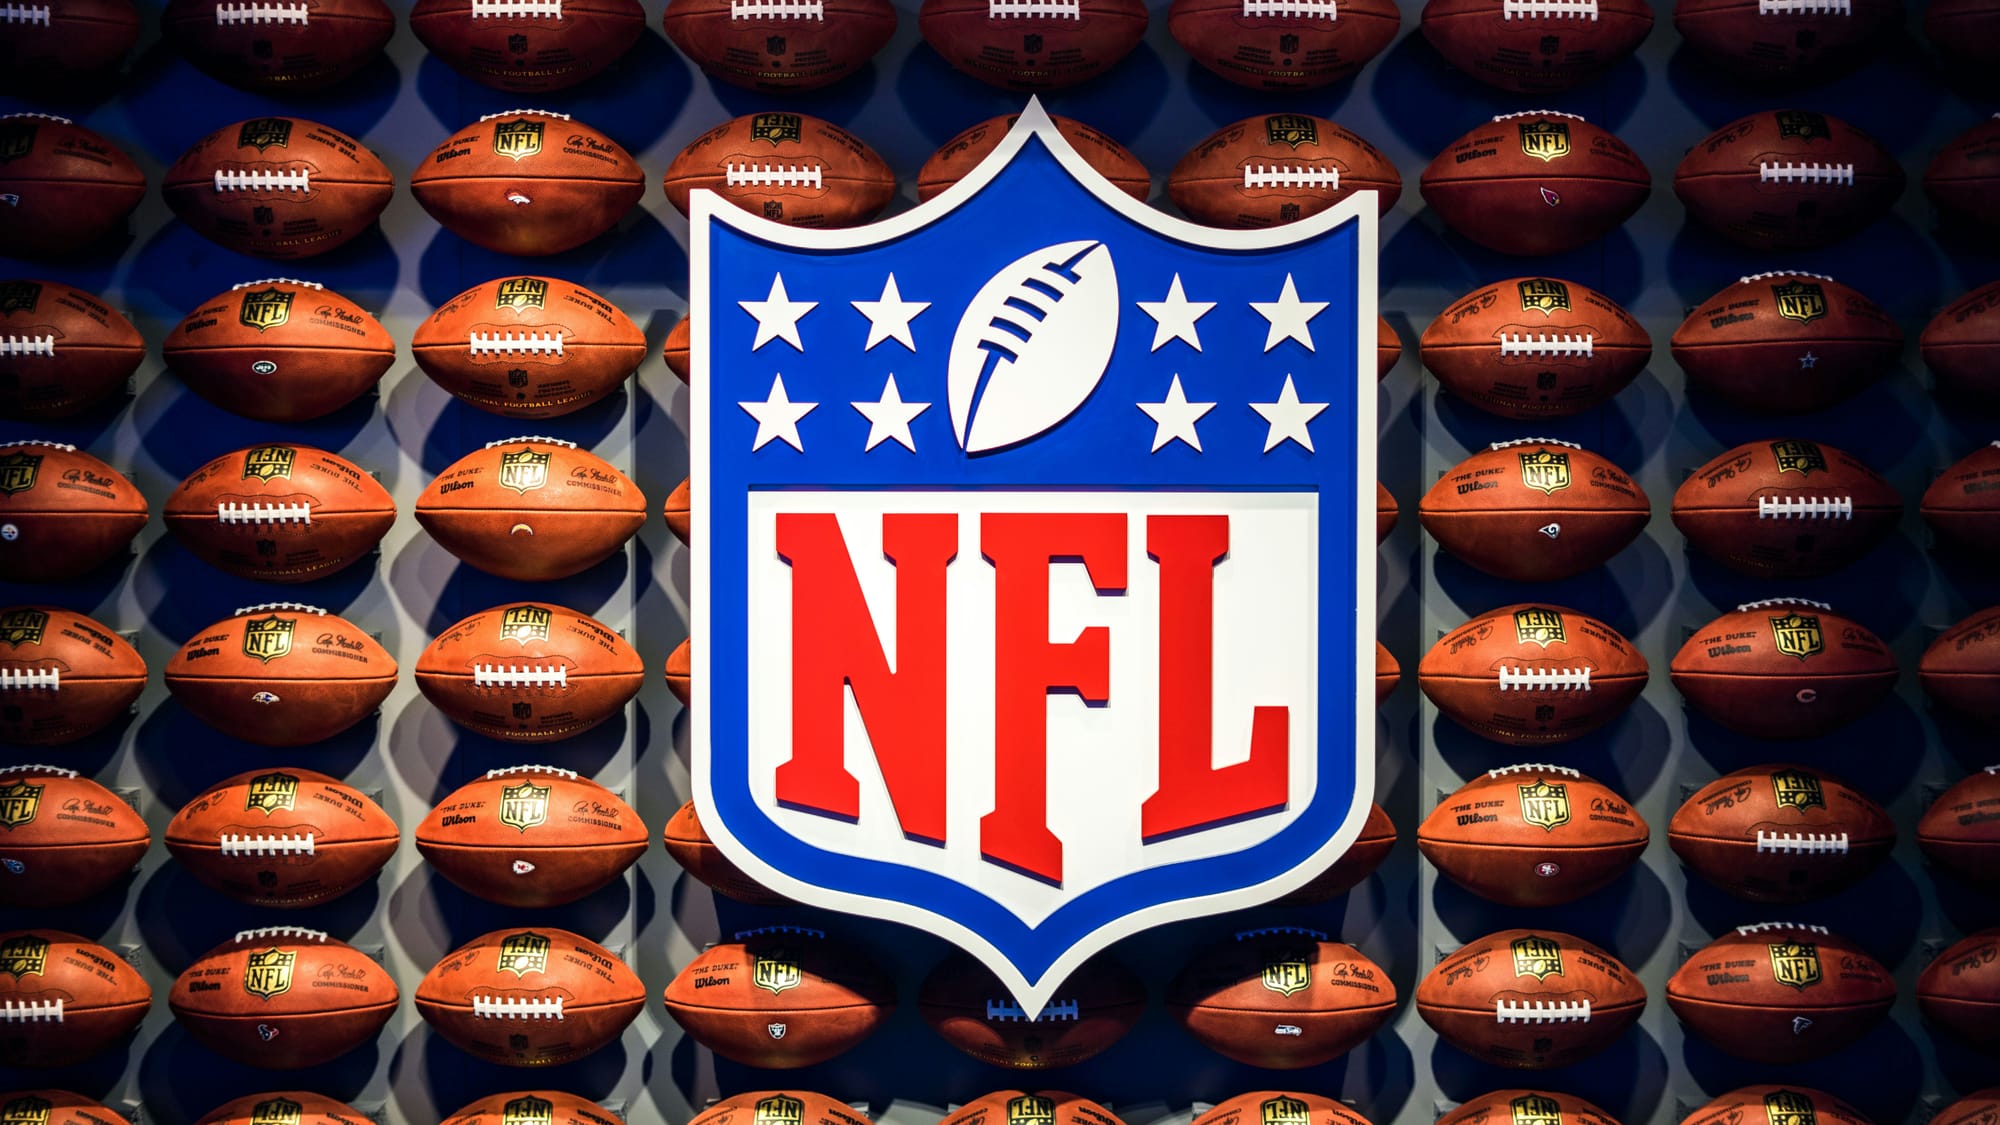 NFL Playoffs Catch Over a Third of All Weekend TV Watch-Time